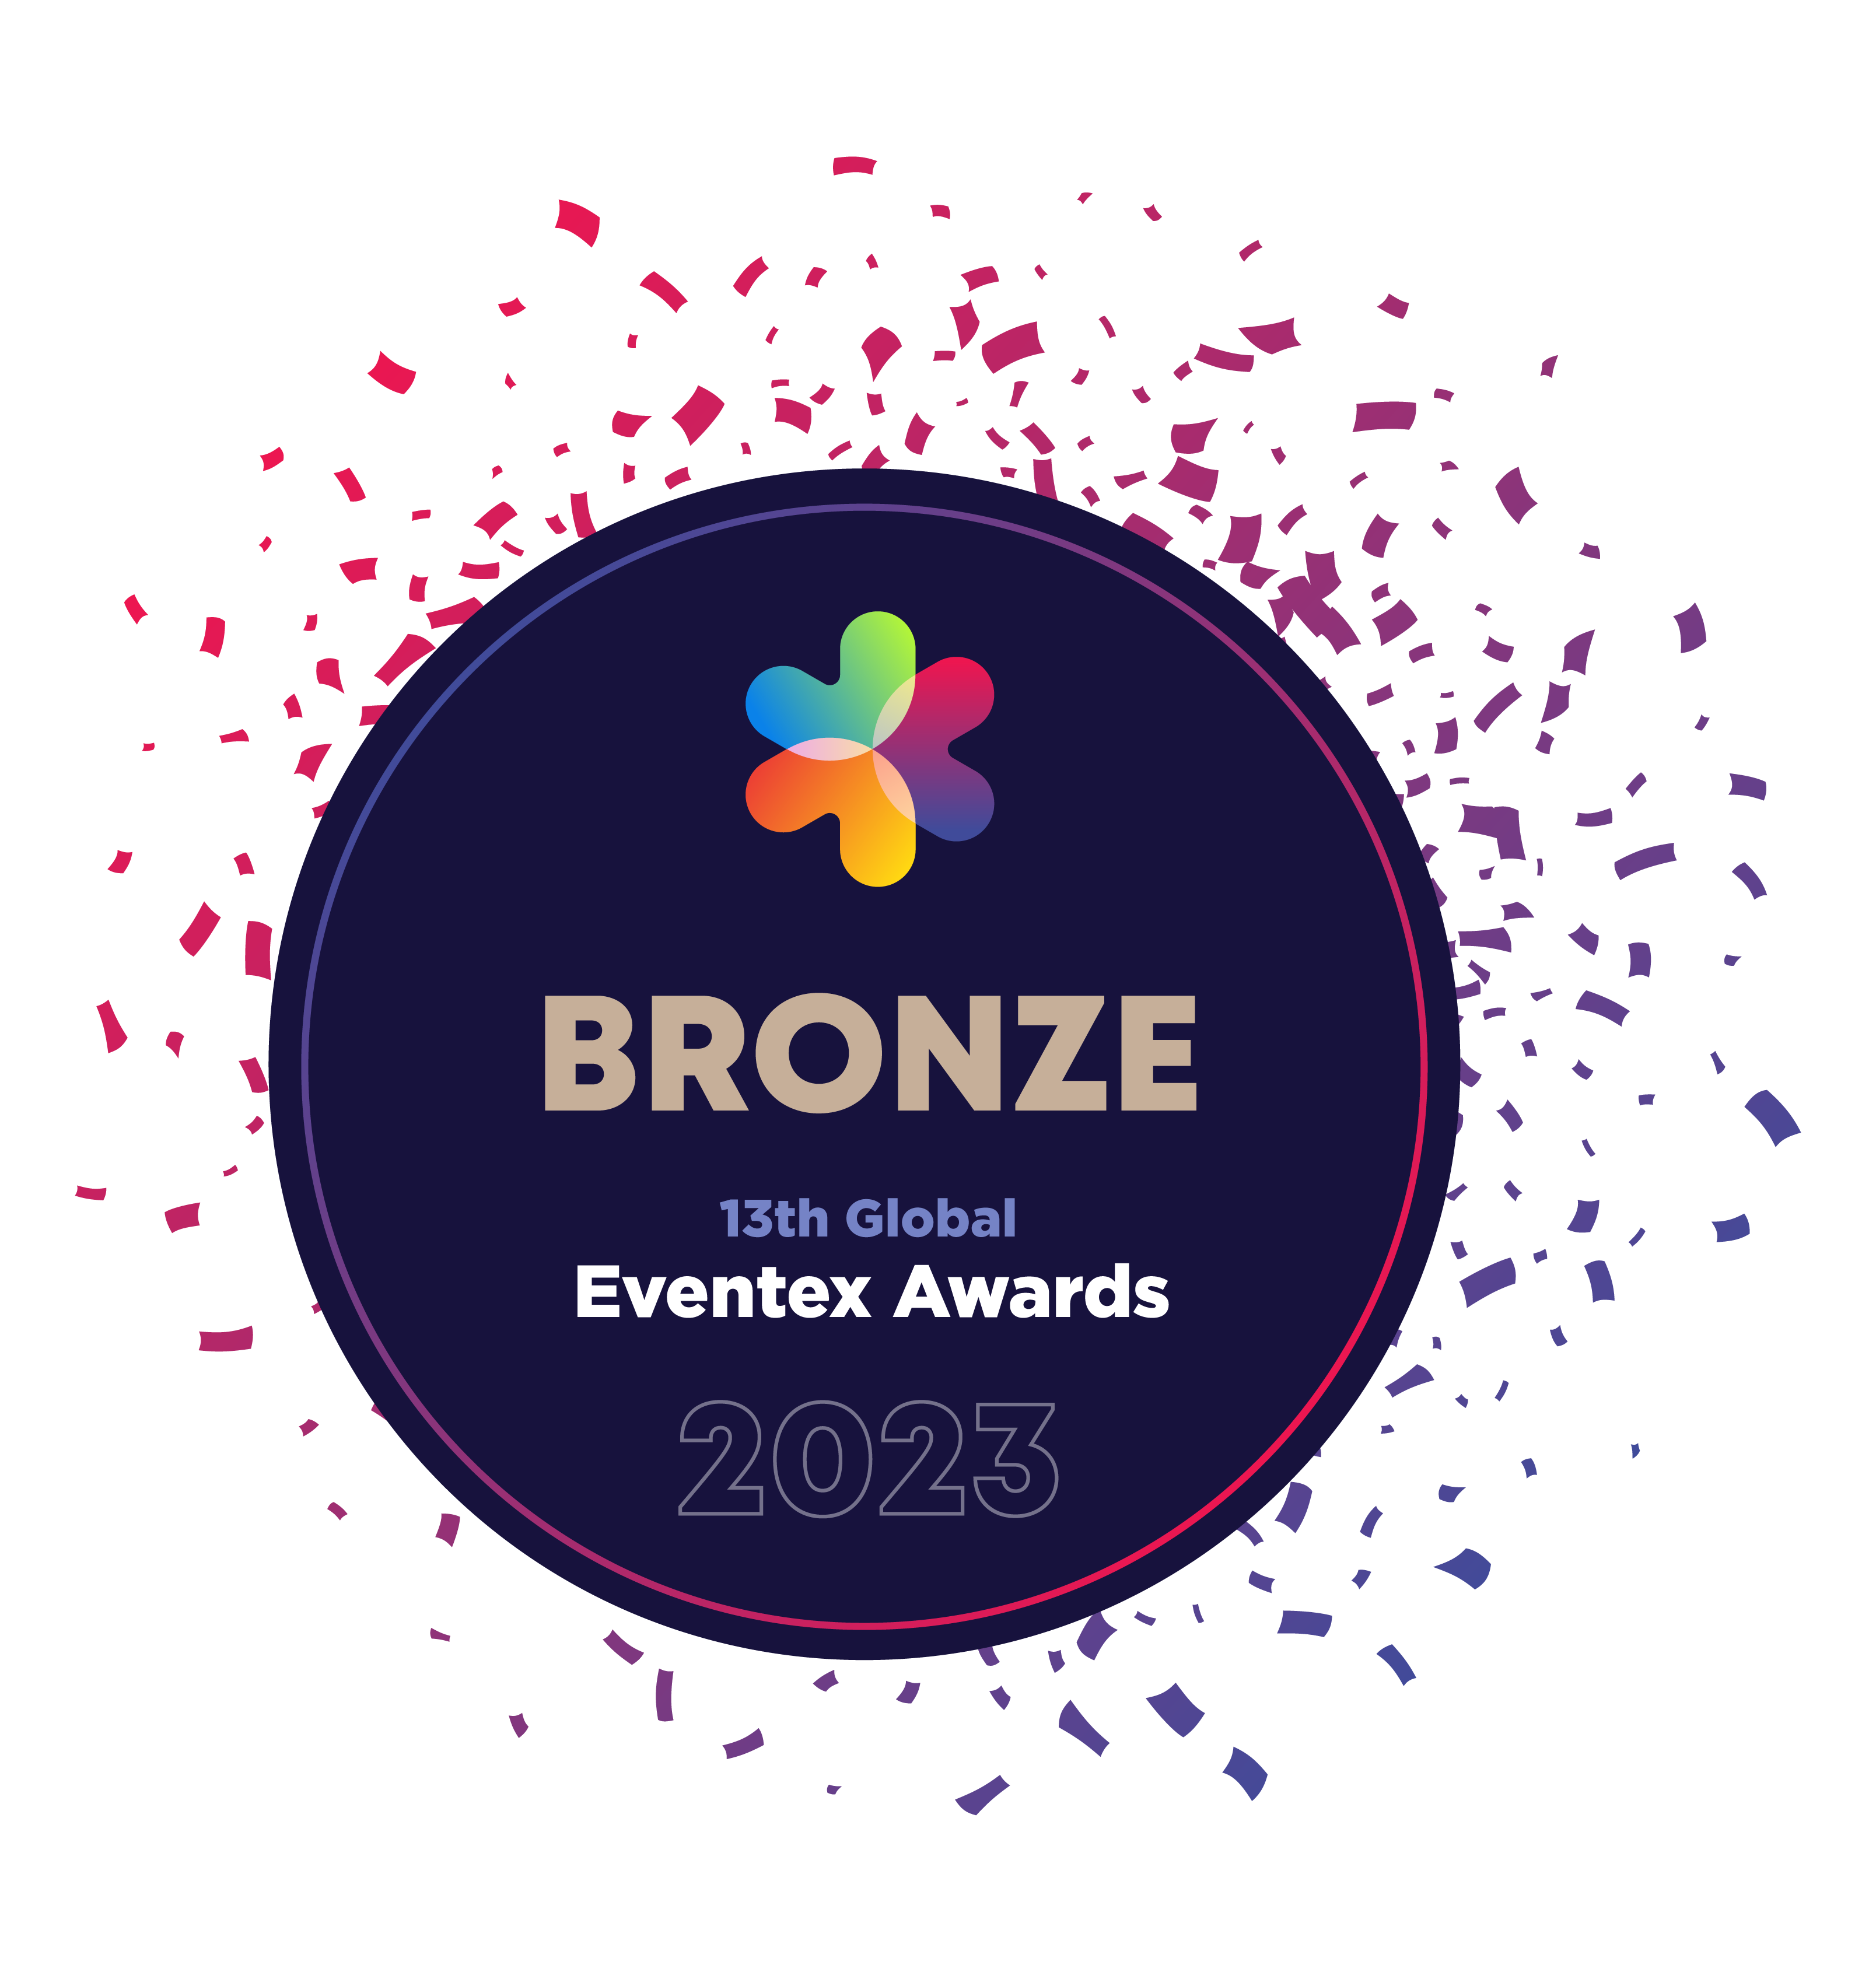 Bronze Award for Eventex Awards 2023